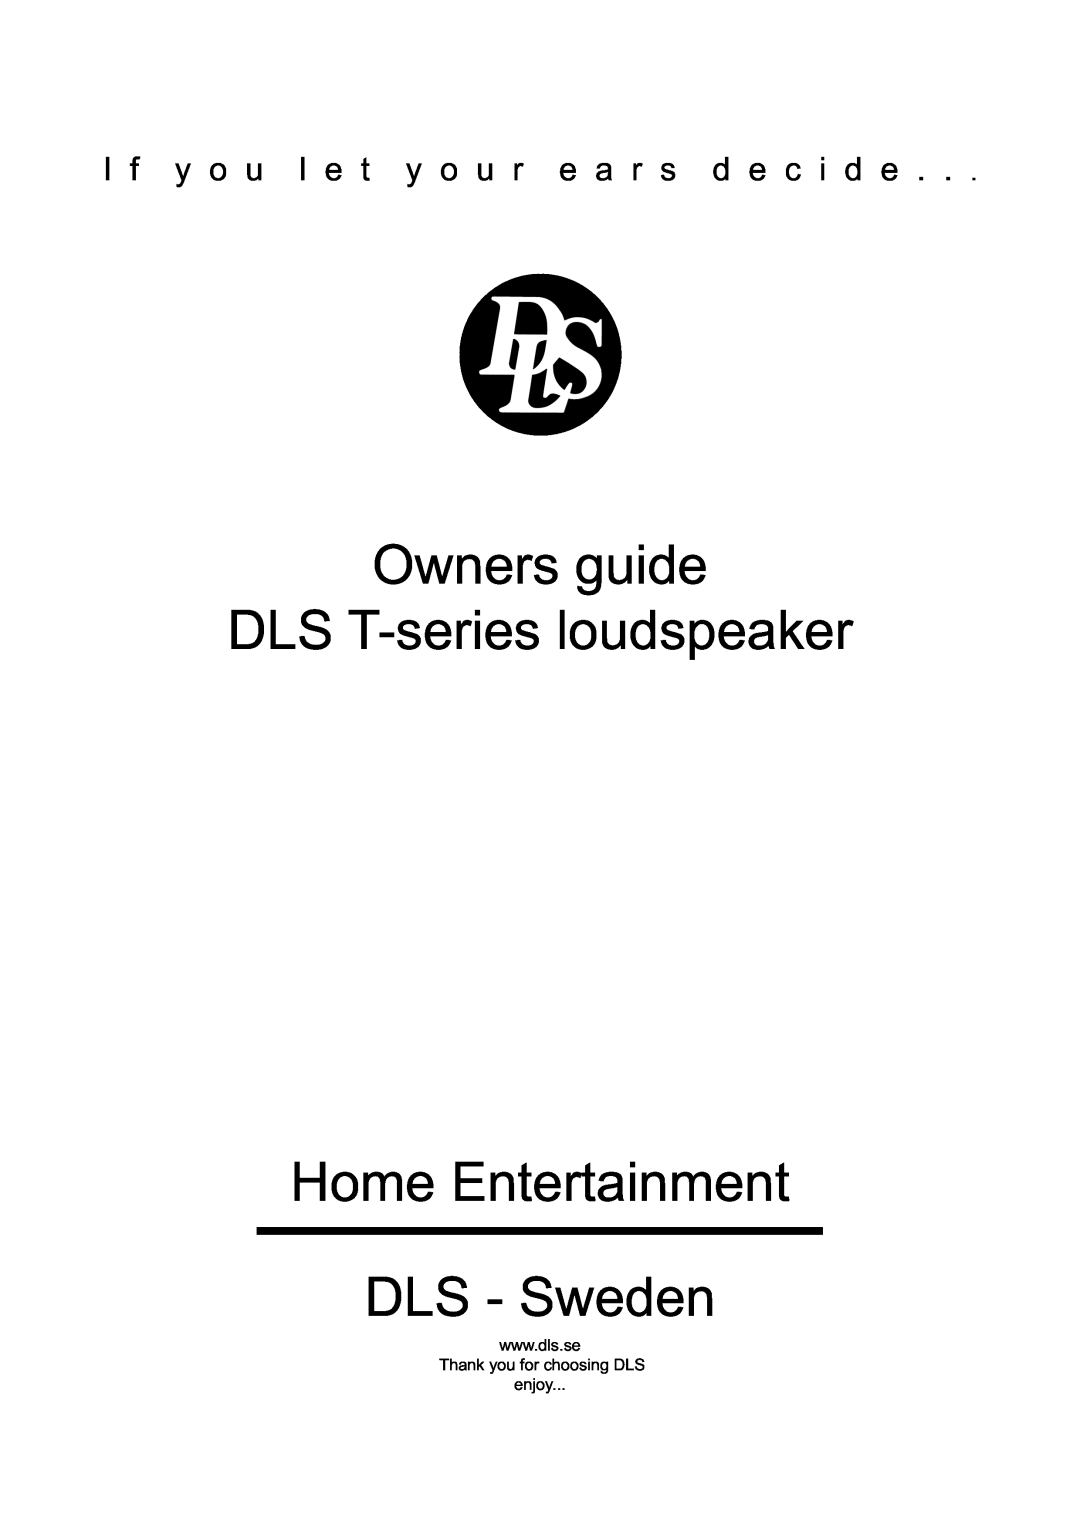 DLS Svenska AB T-Series manual Owners guide DLS T-seriesloudspeaker, Home Entertainment DLS - Sweden 